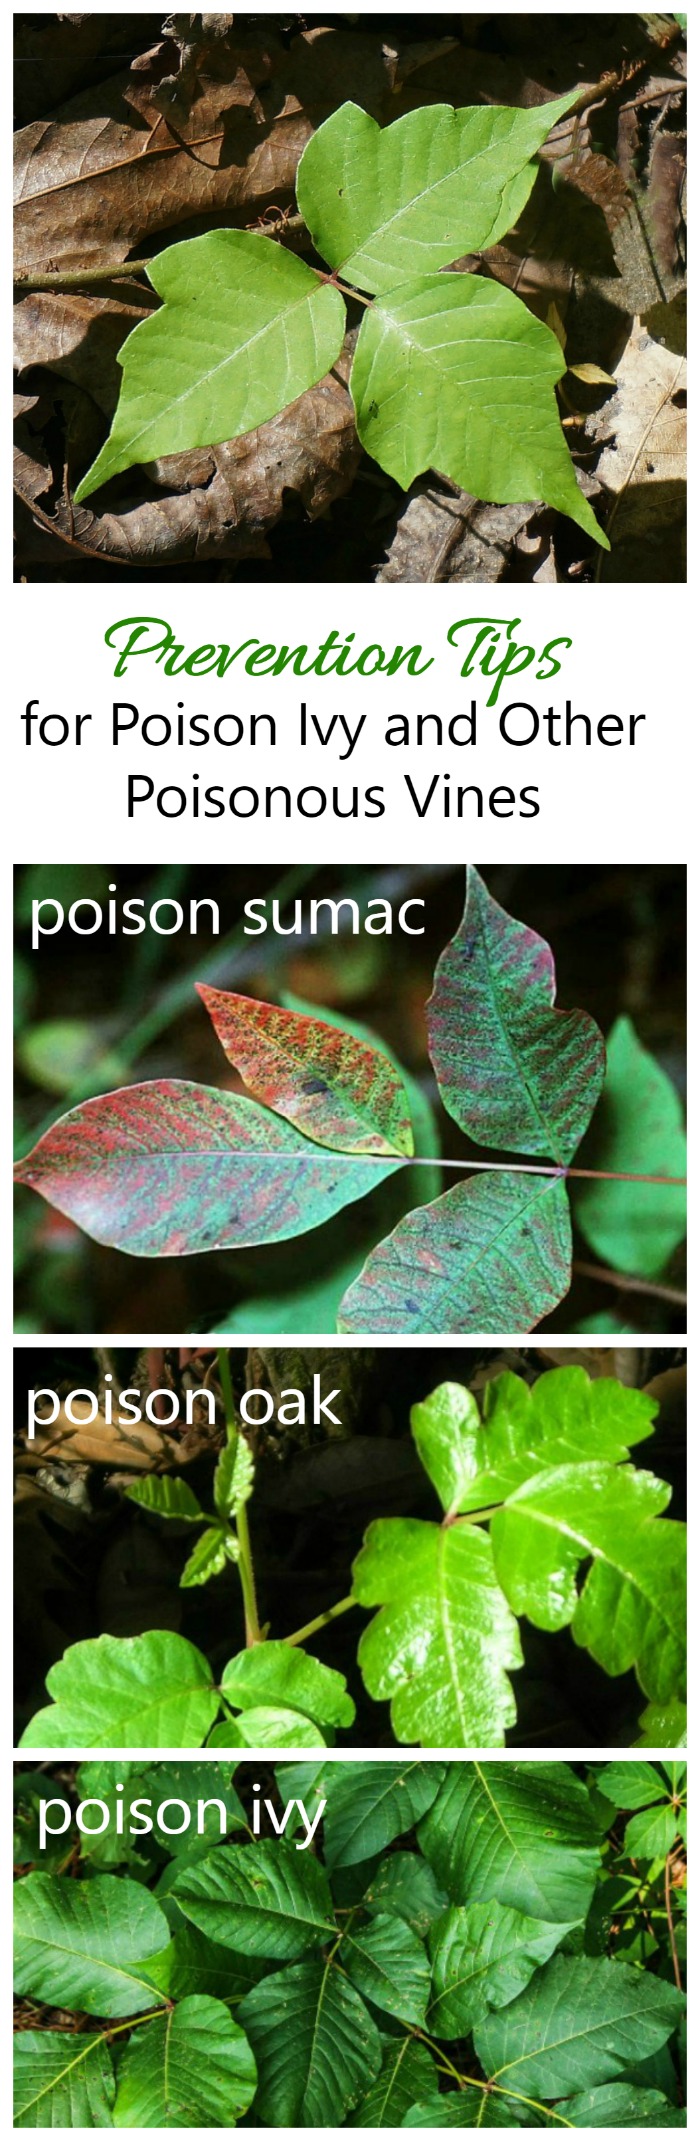 Poison Ivy and Poisonous Vines - Natural Preventative Measures